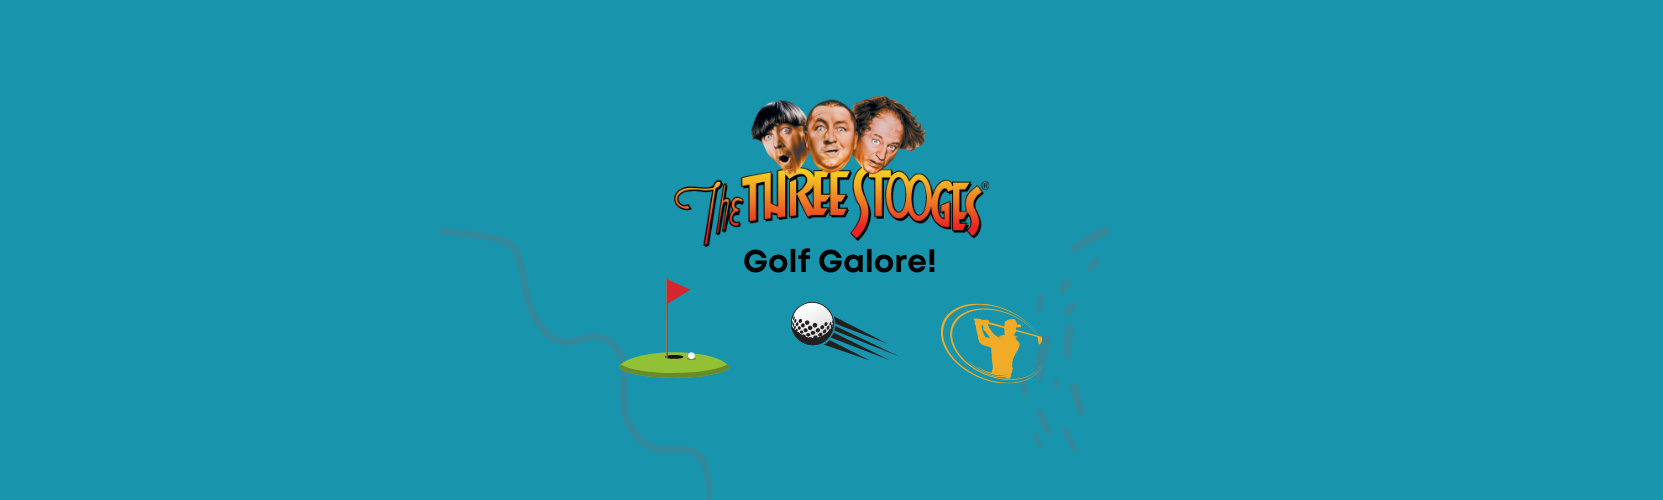 ShopKnuckleheads: Golf Galore!